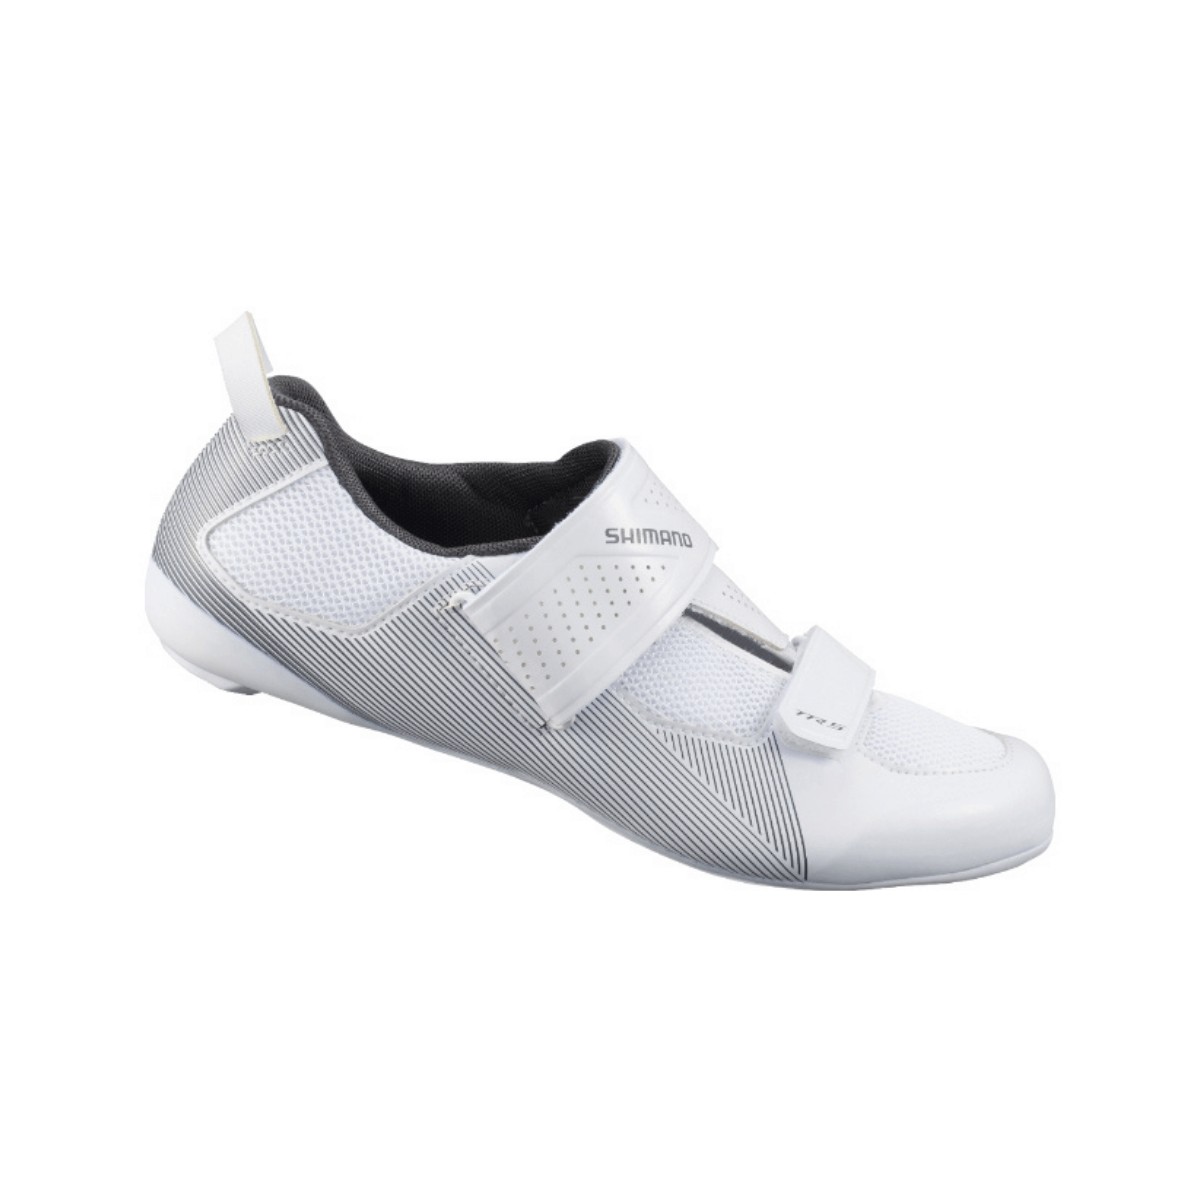 Sapatos Shimano TR501 Brancos, Tamanho 38 - EUR